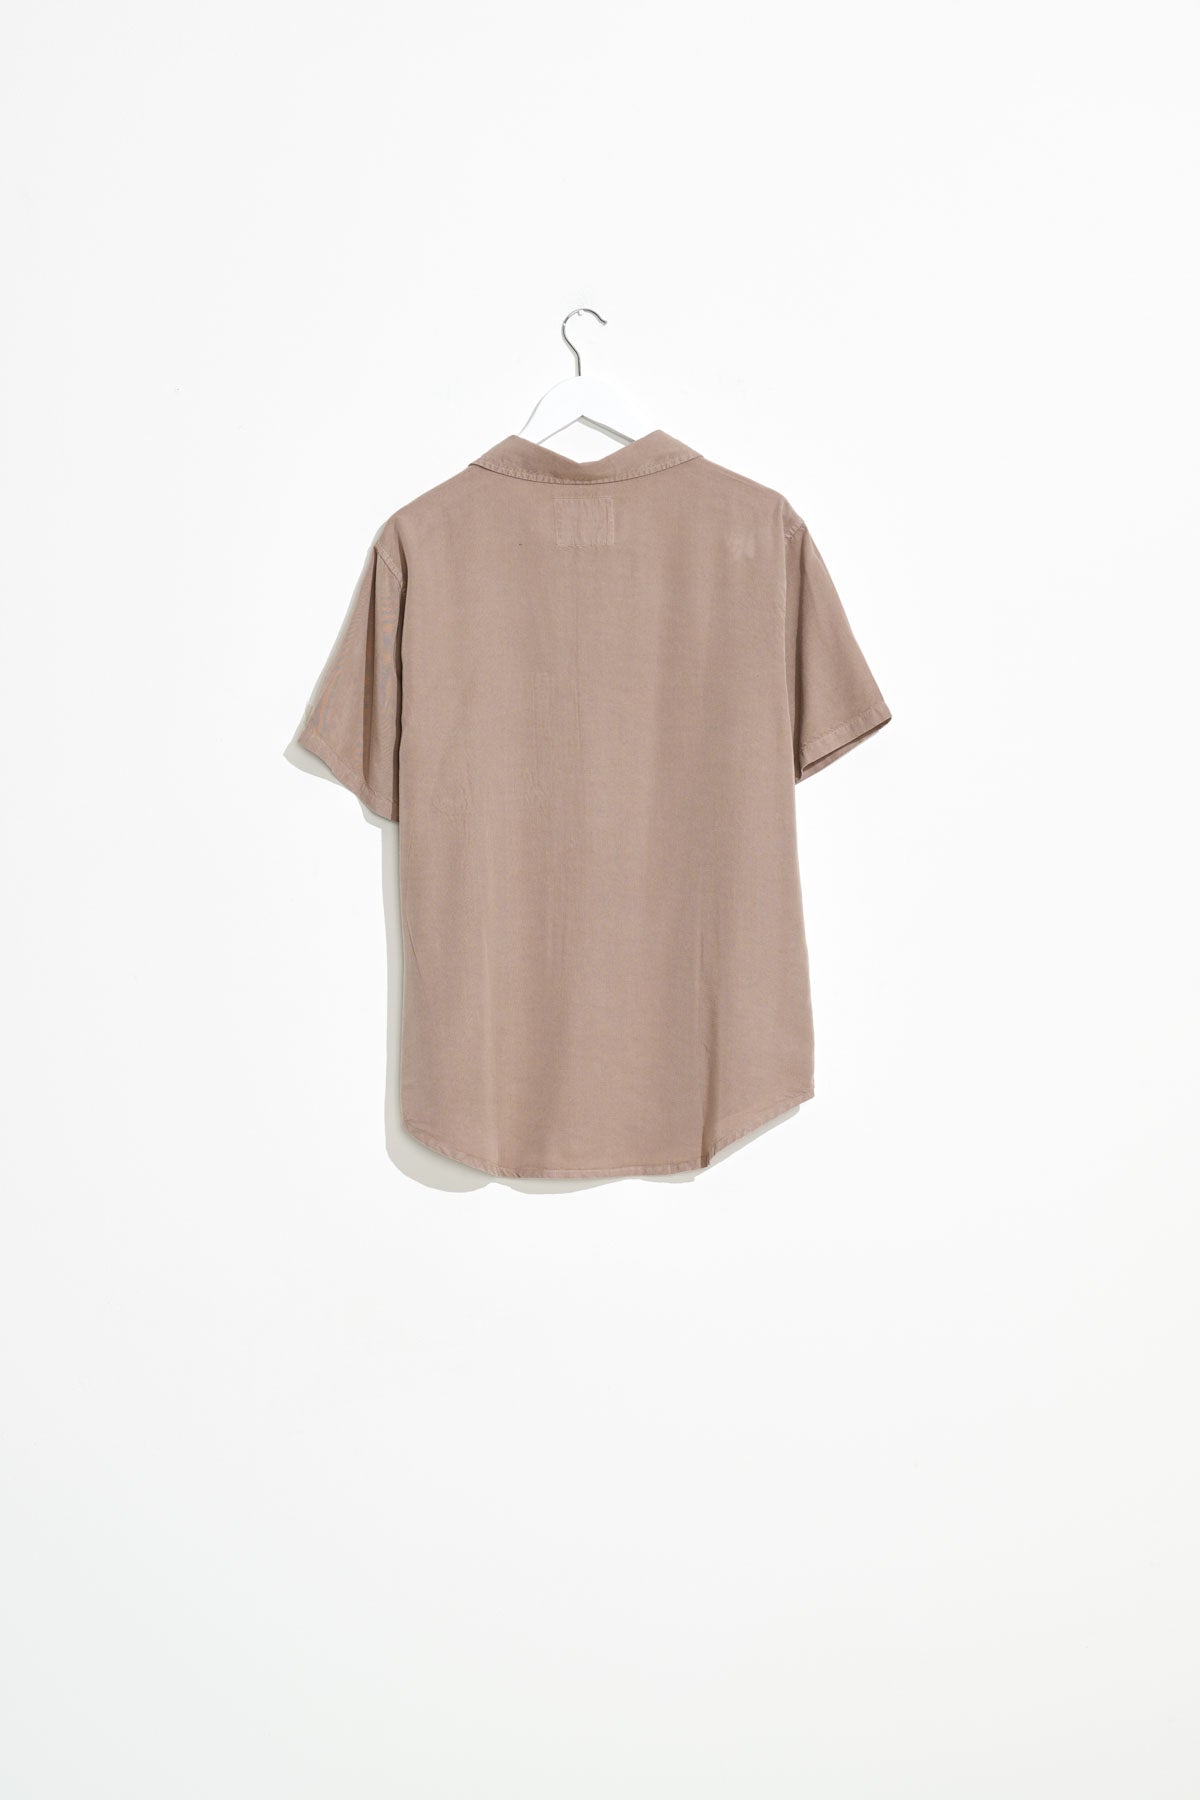 Misfit Shapes - Endormi SS Shirt - Pigment Stone